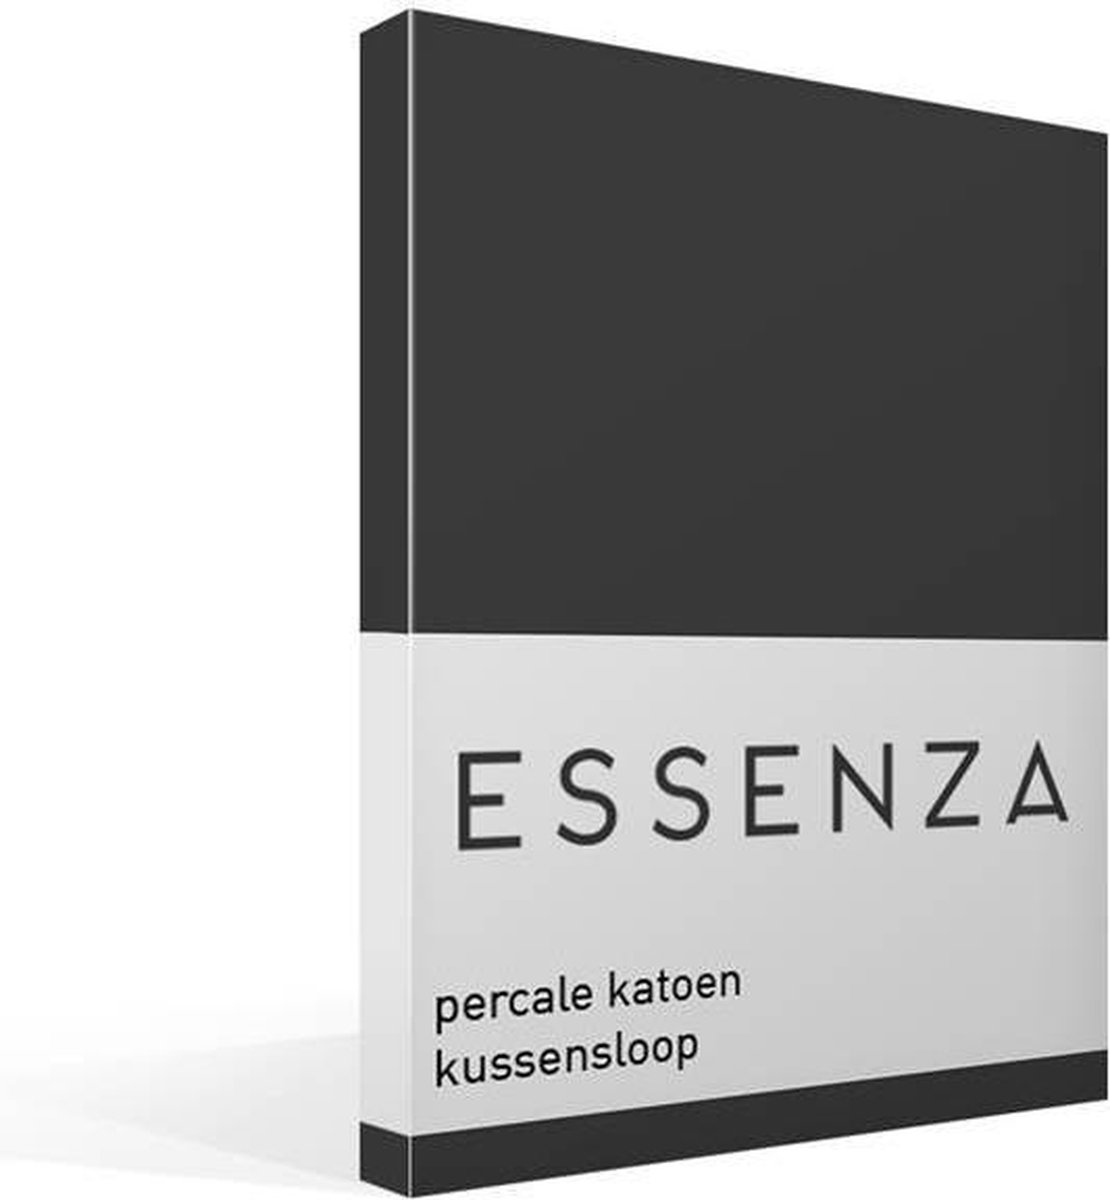 Essenza Kussensloop Premium Percale - 60 x 70 cm - antraciet